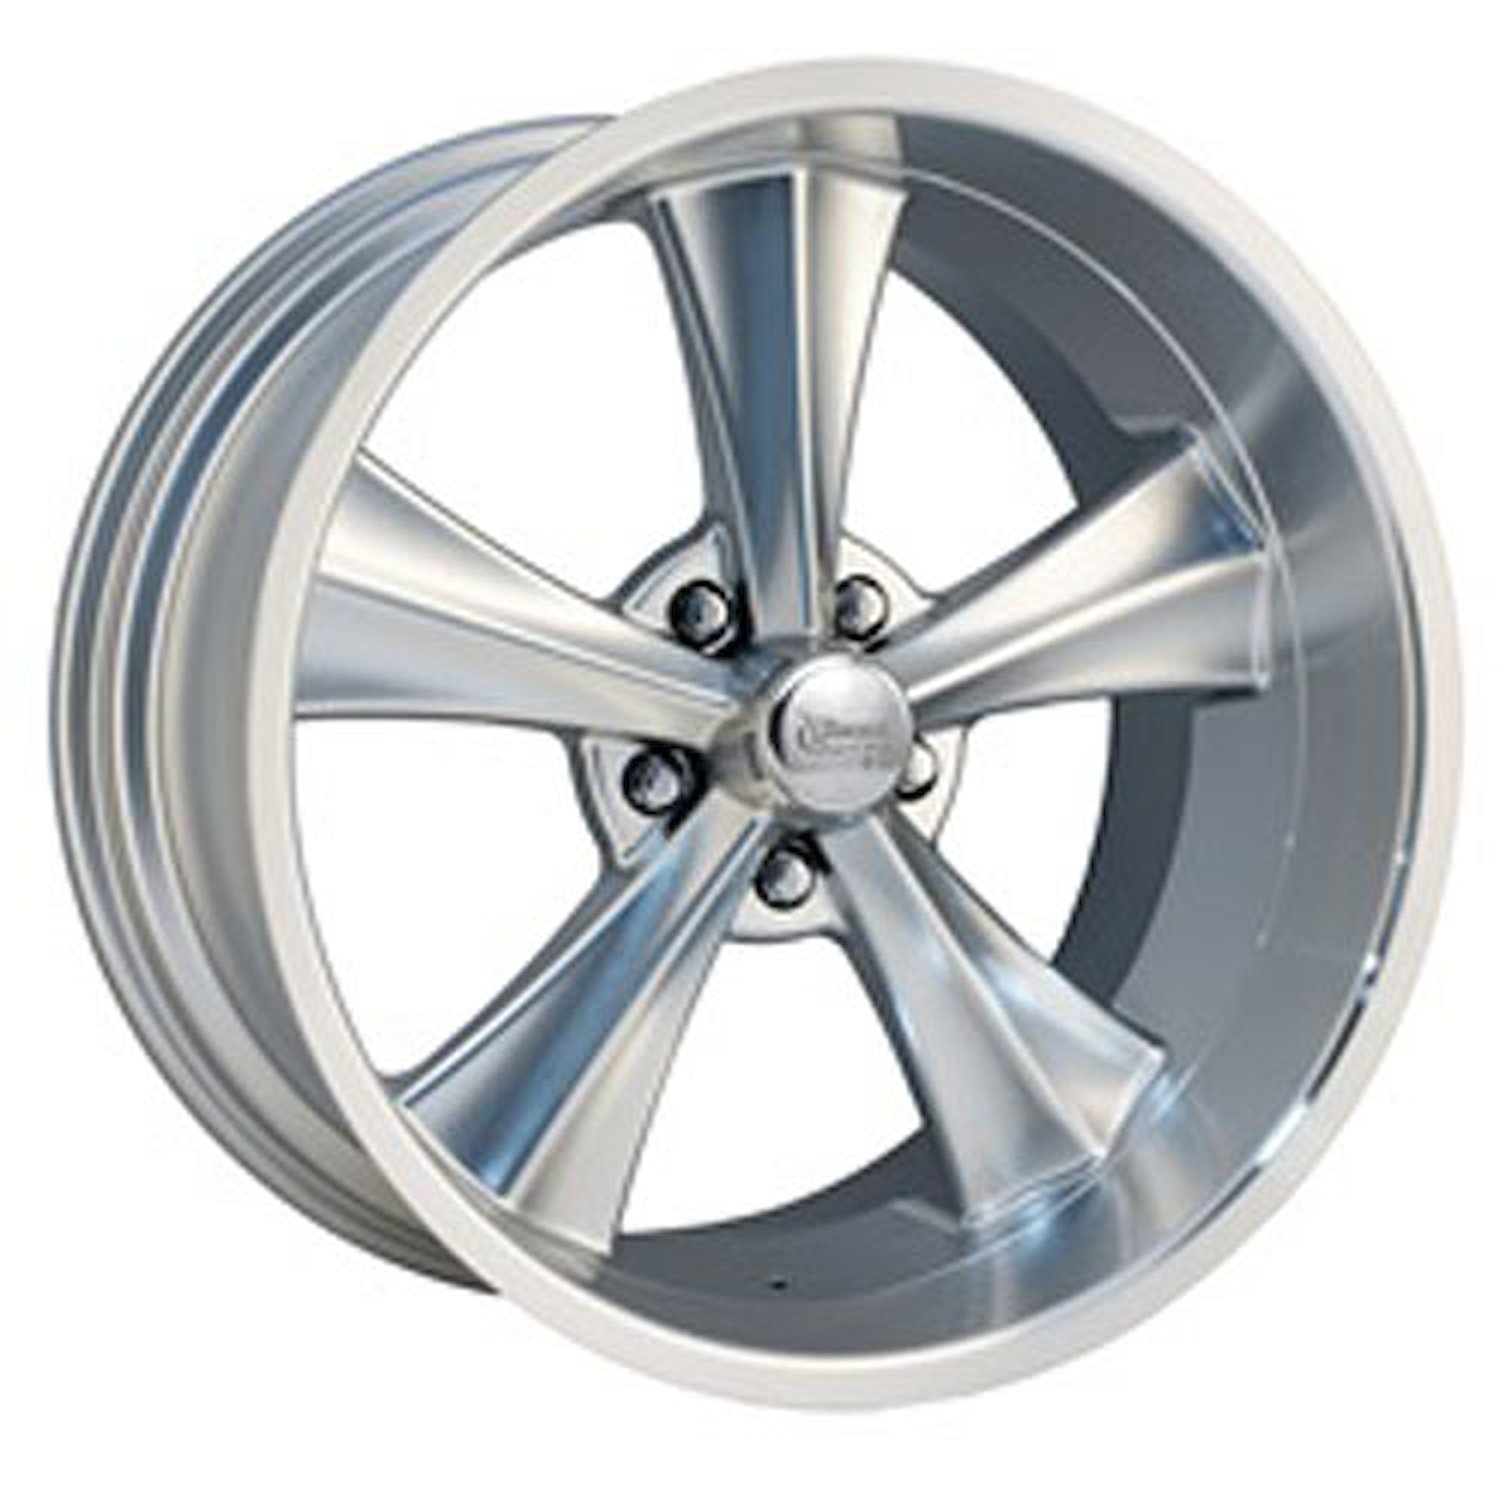 Booster Wheel - Hyper Silver Size: 20" x 10"